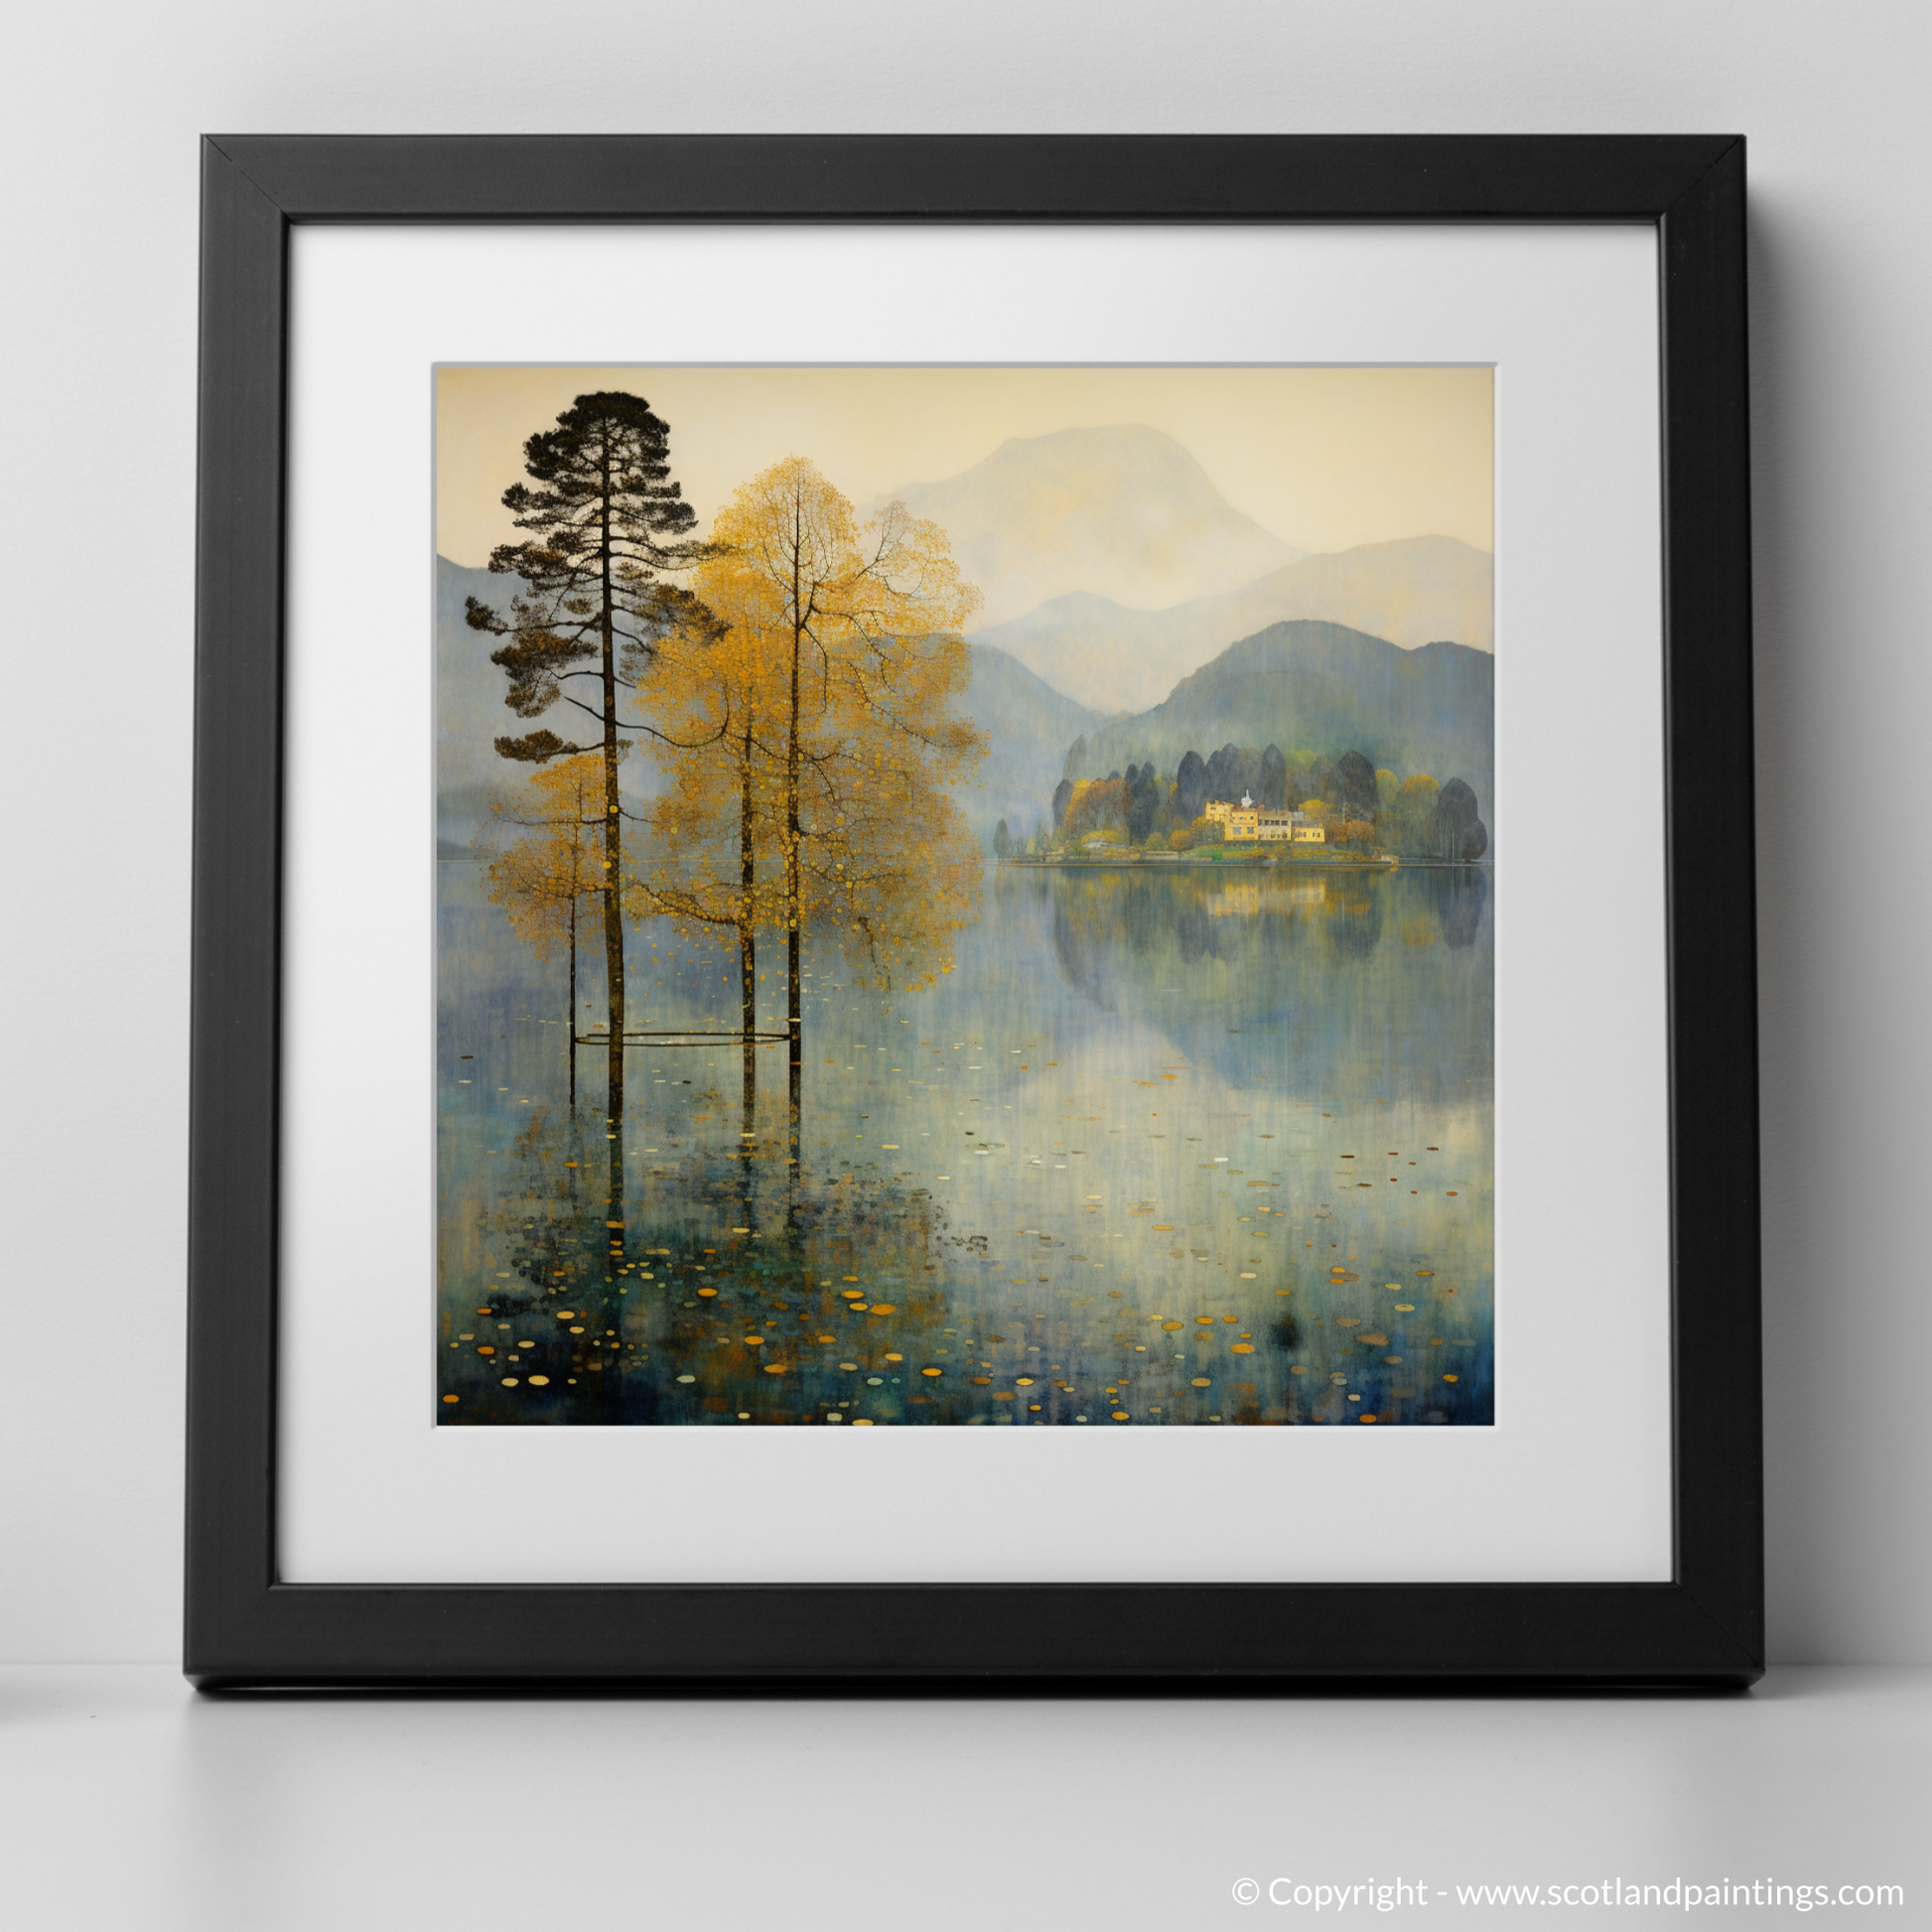 Art Print of Misty morning on Loch Lomond with a black frame